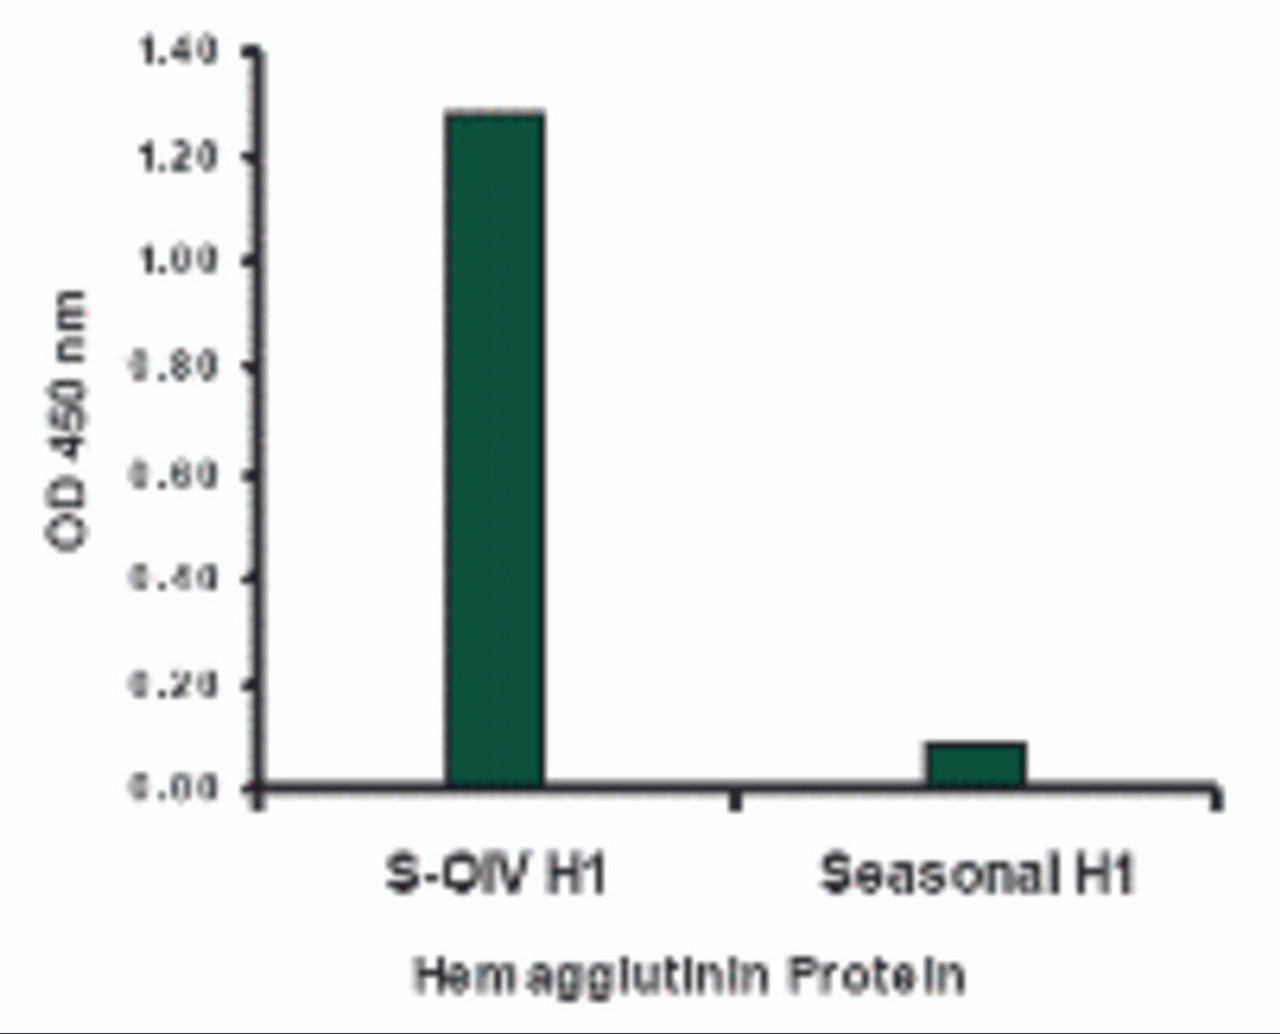 Swine-origin Hemagglutinin antibody at 2 ug/mL specifically recognizes swine-origin influenza virus (S-OIV) A H1N1 but not seasonal influenza virus A H1N1 Hemagglutinin protein.